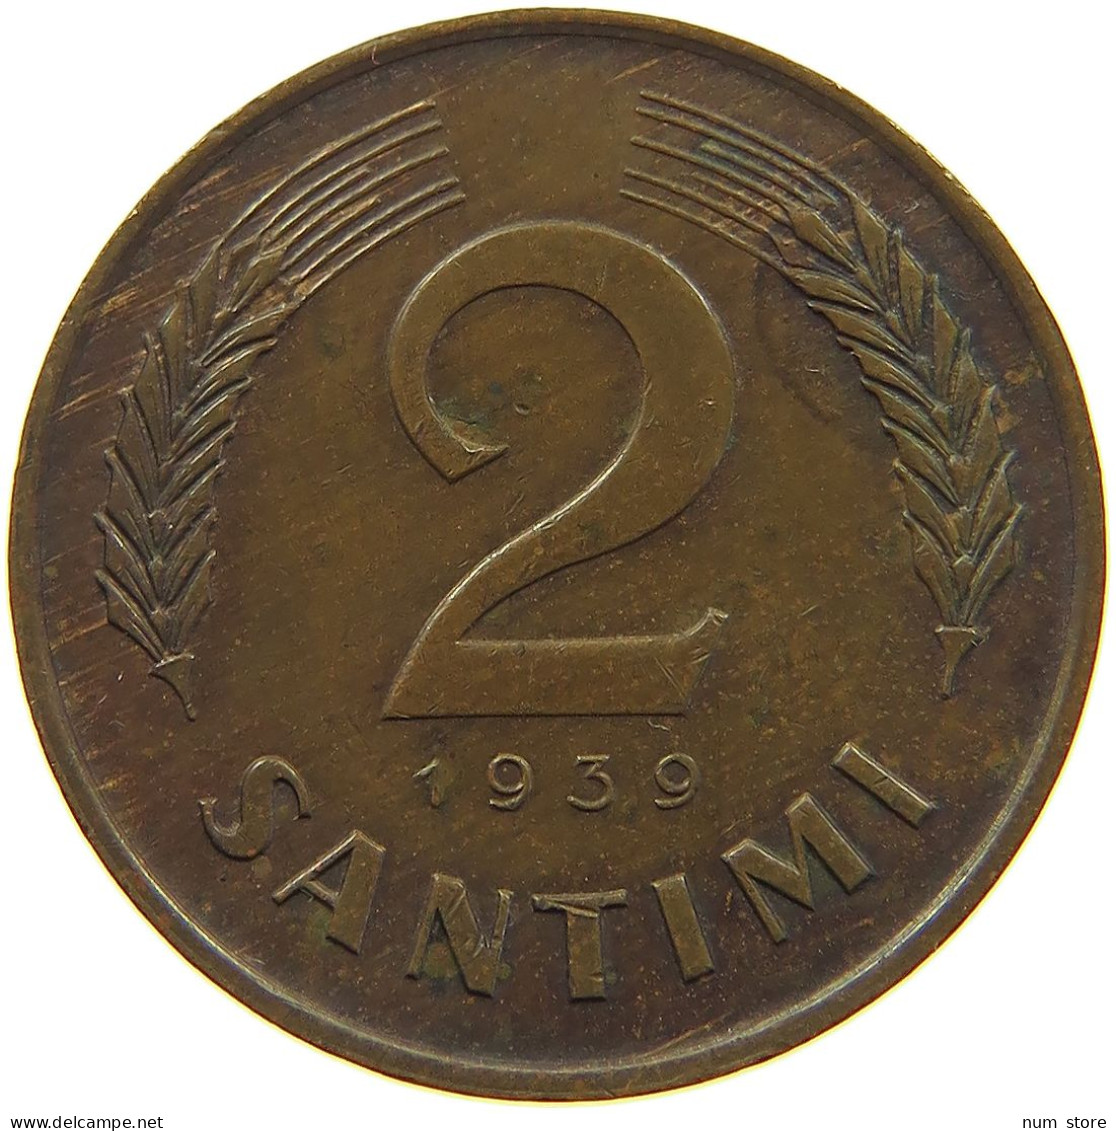 LATVIA 2 SANTIMI 1939  #a095 0653 - Latvia